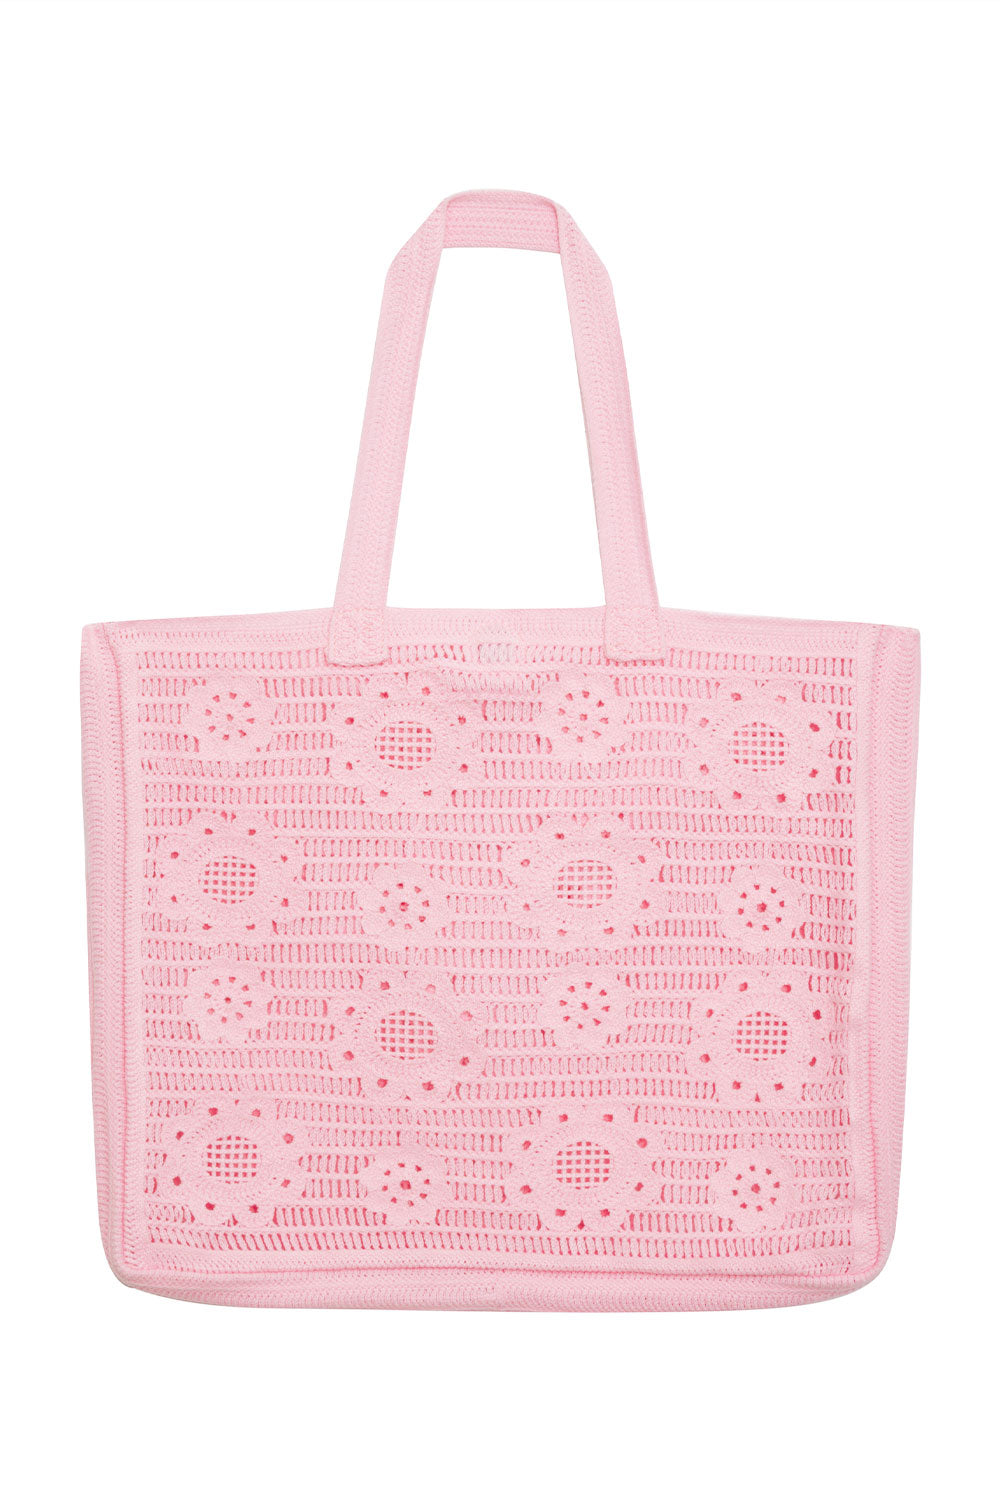 Crochet Tote Bag in 2 Sizes - Crochet Dreamz